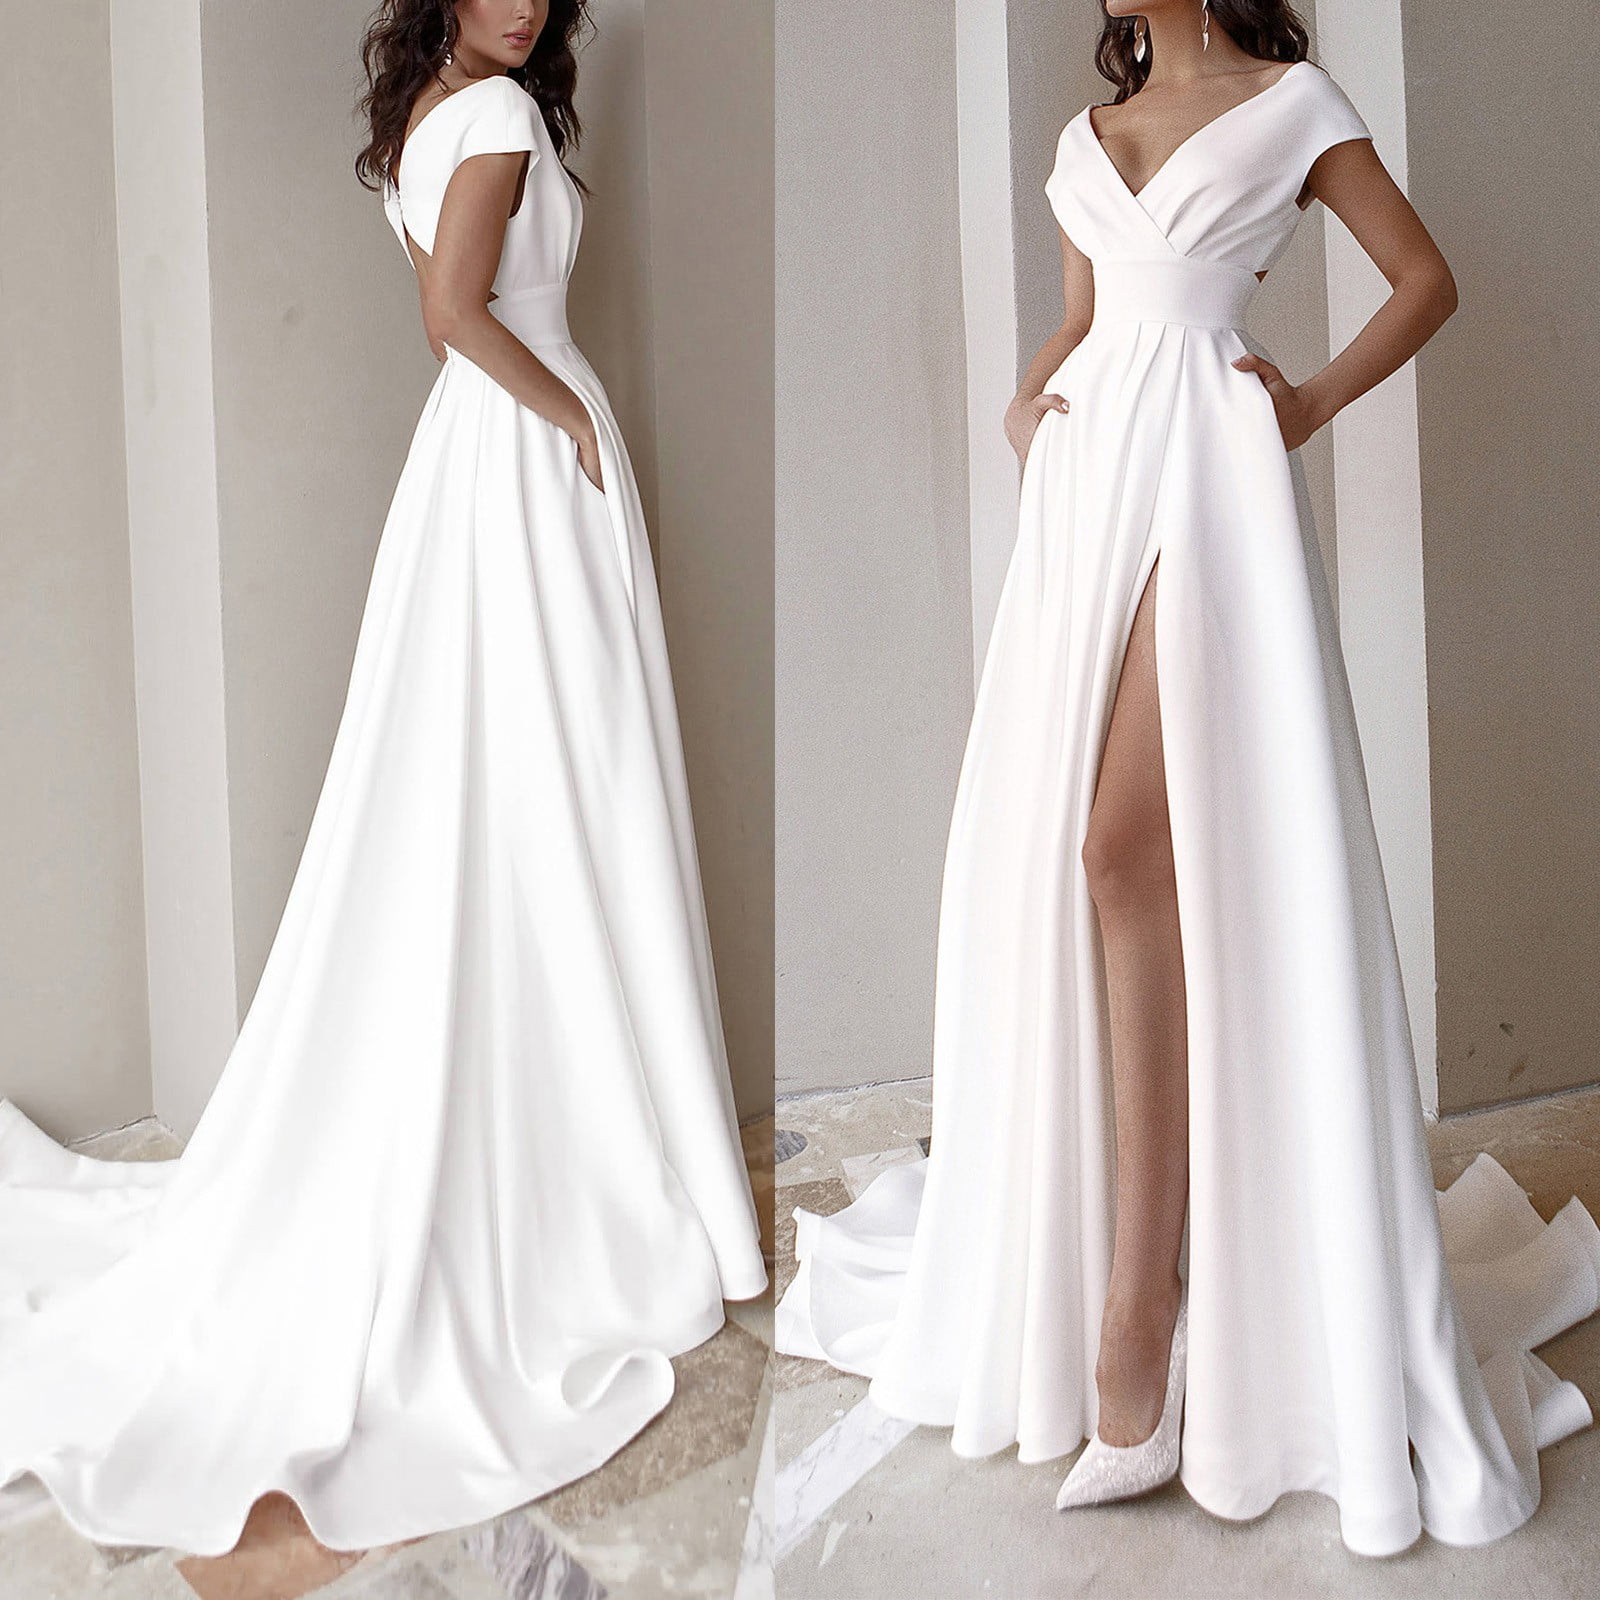 white elegant dress